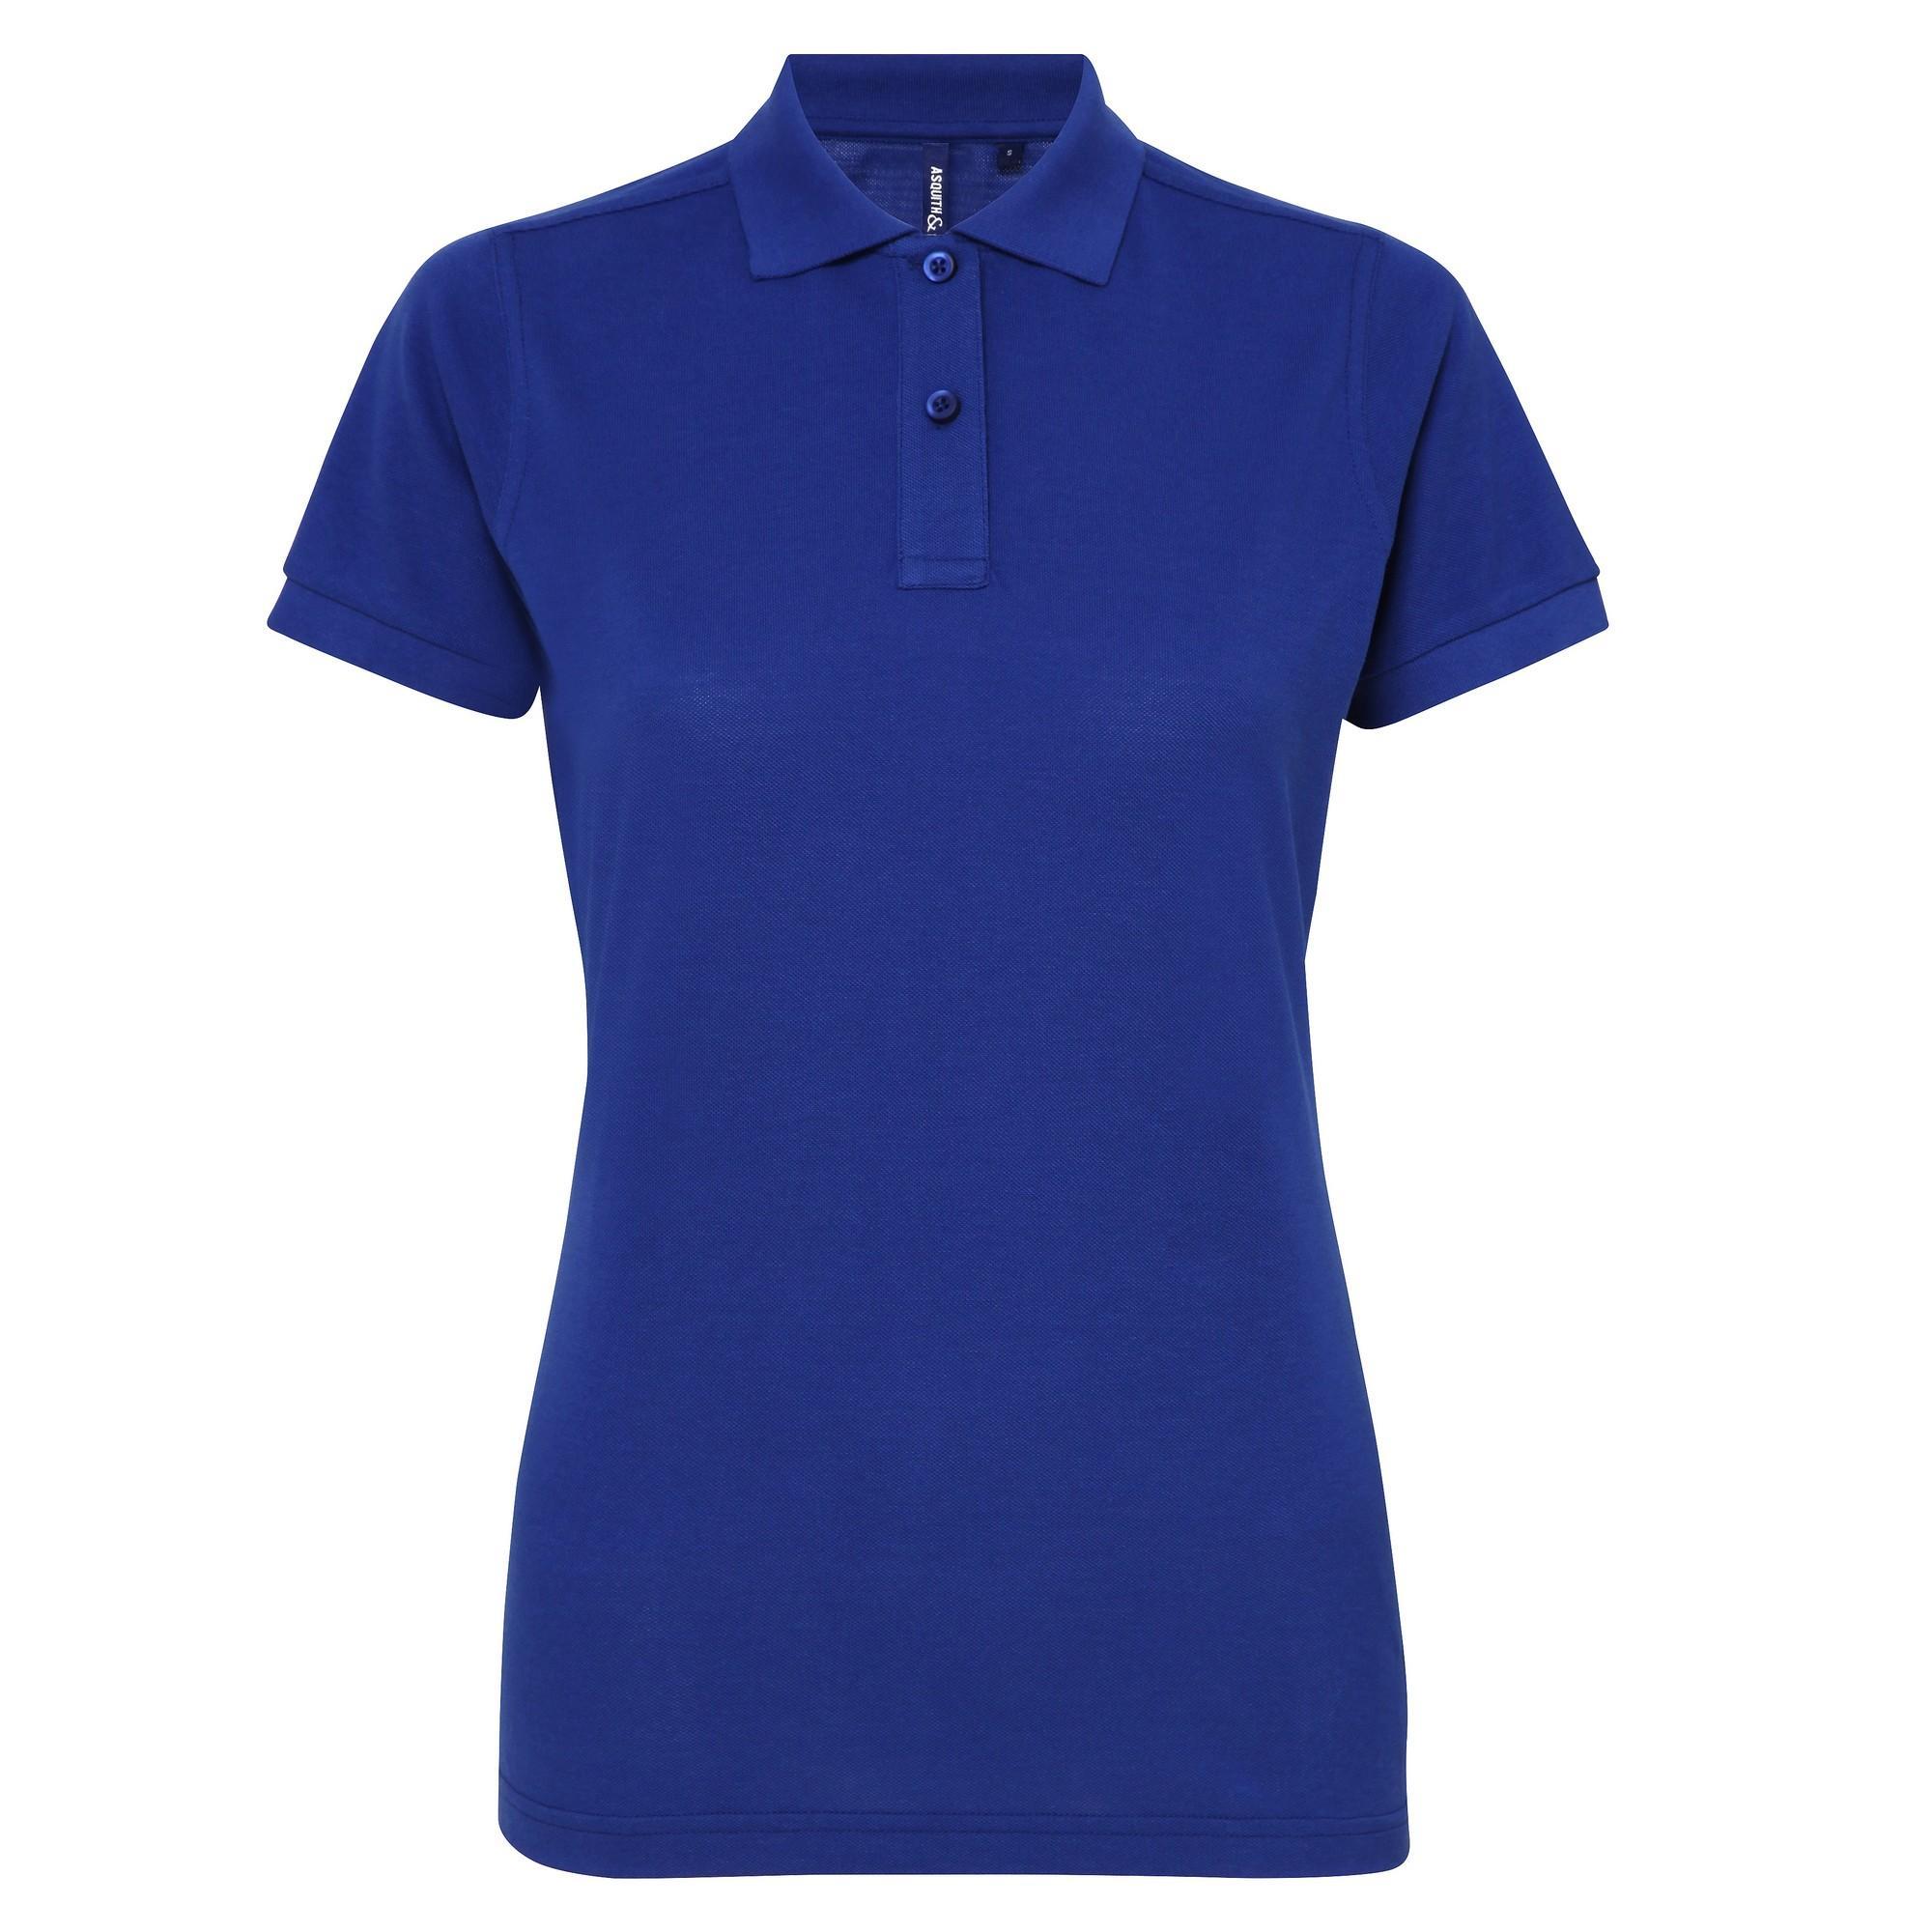 Asquith & Fox Womens/Ladies Short Sleeve Performance Blend Polo Shirt (Royal) (L)